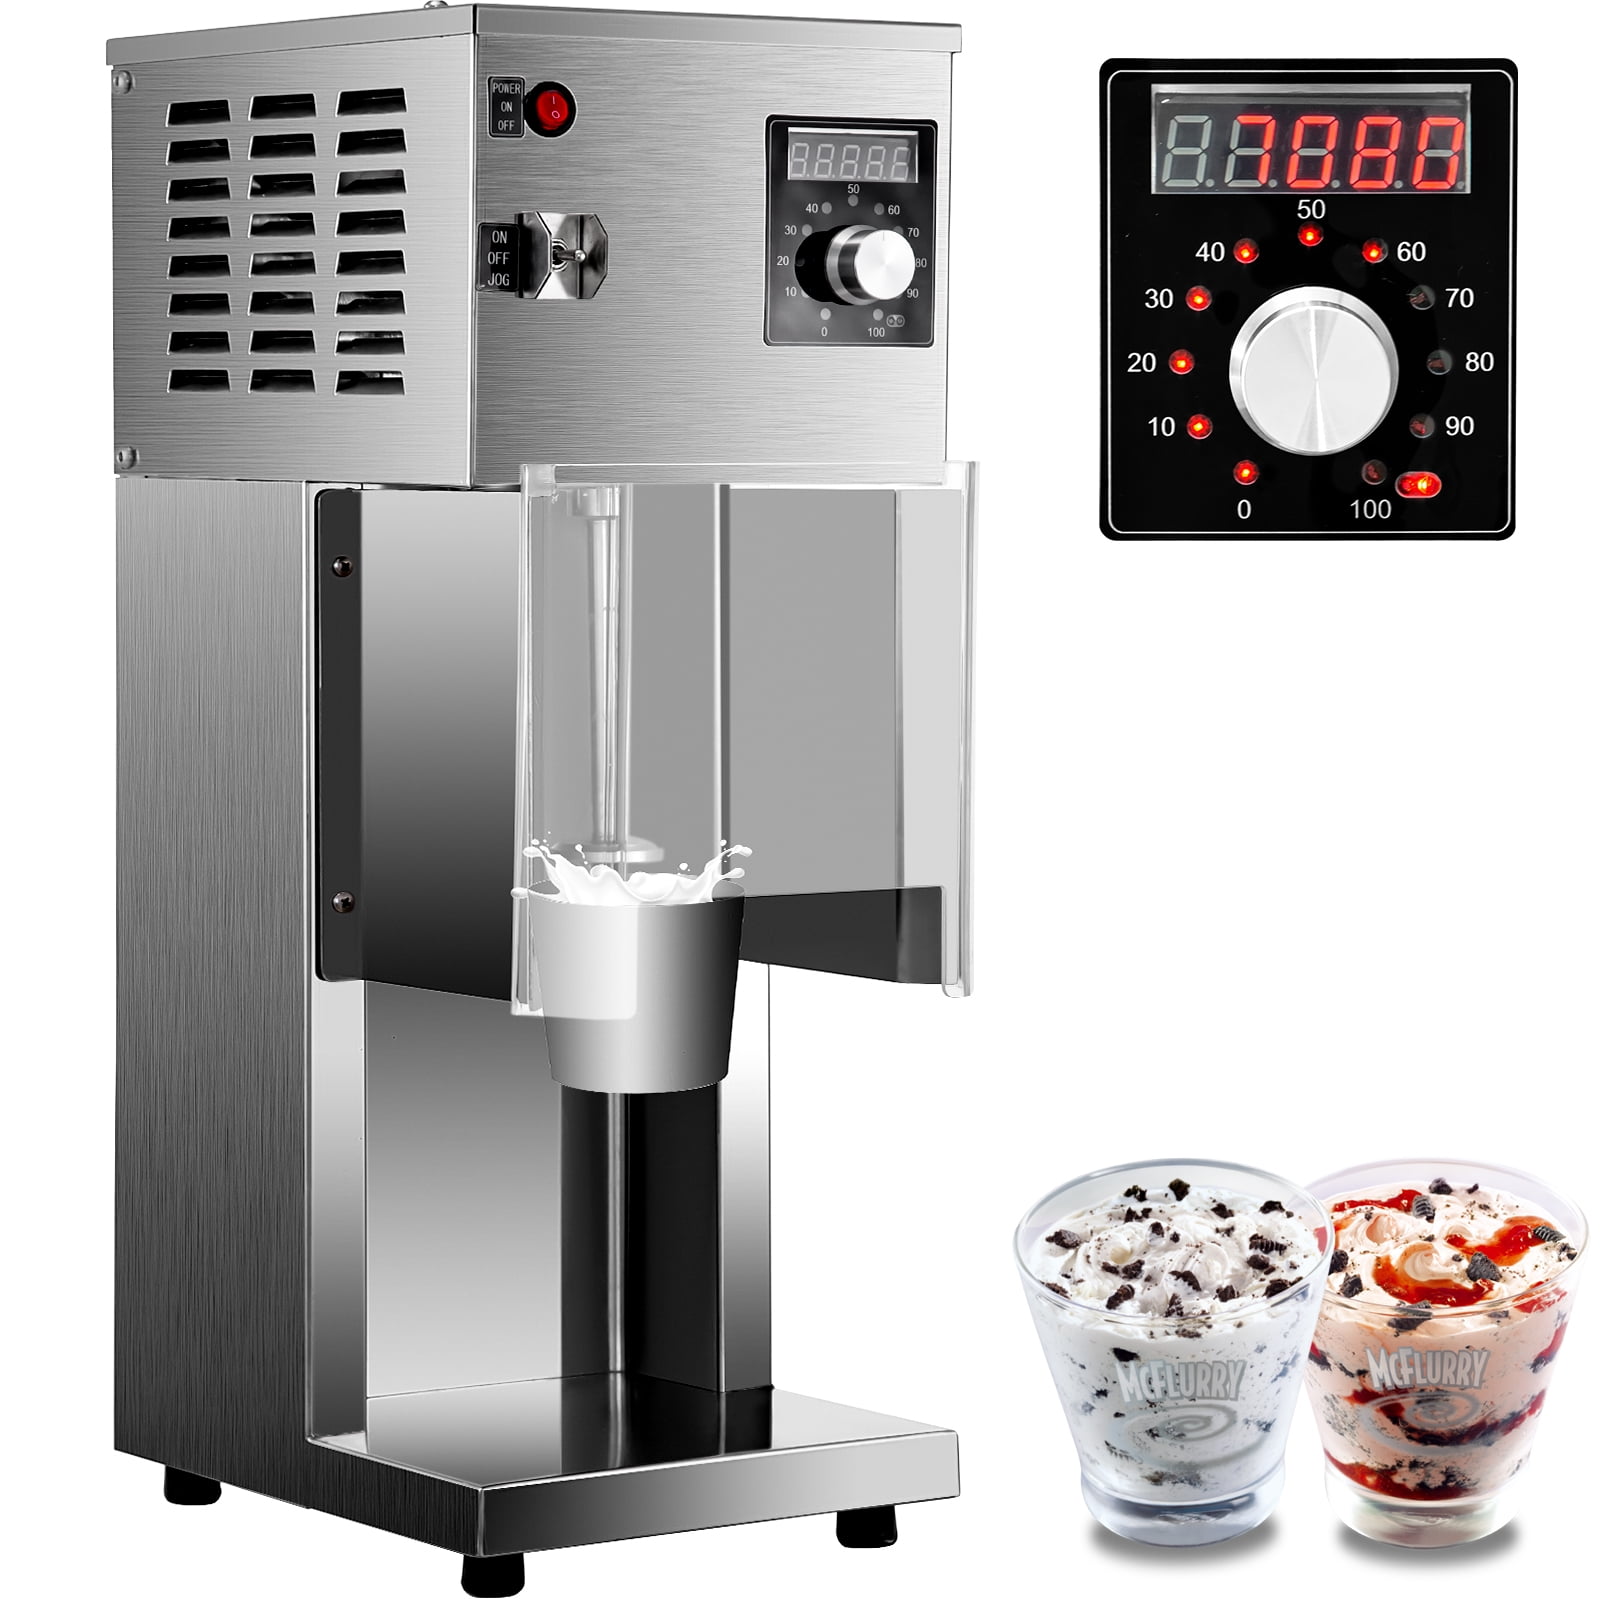 Homemaxs Ice Cream Maker Accessories Ice Cream Machine Handle Large Ice Cream Machine Grip Ice Cream Machine Part, Size: 17x6x6xCM